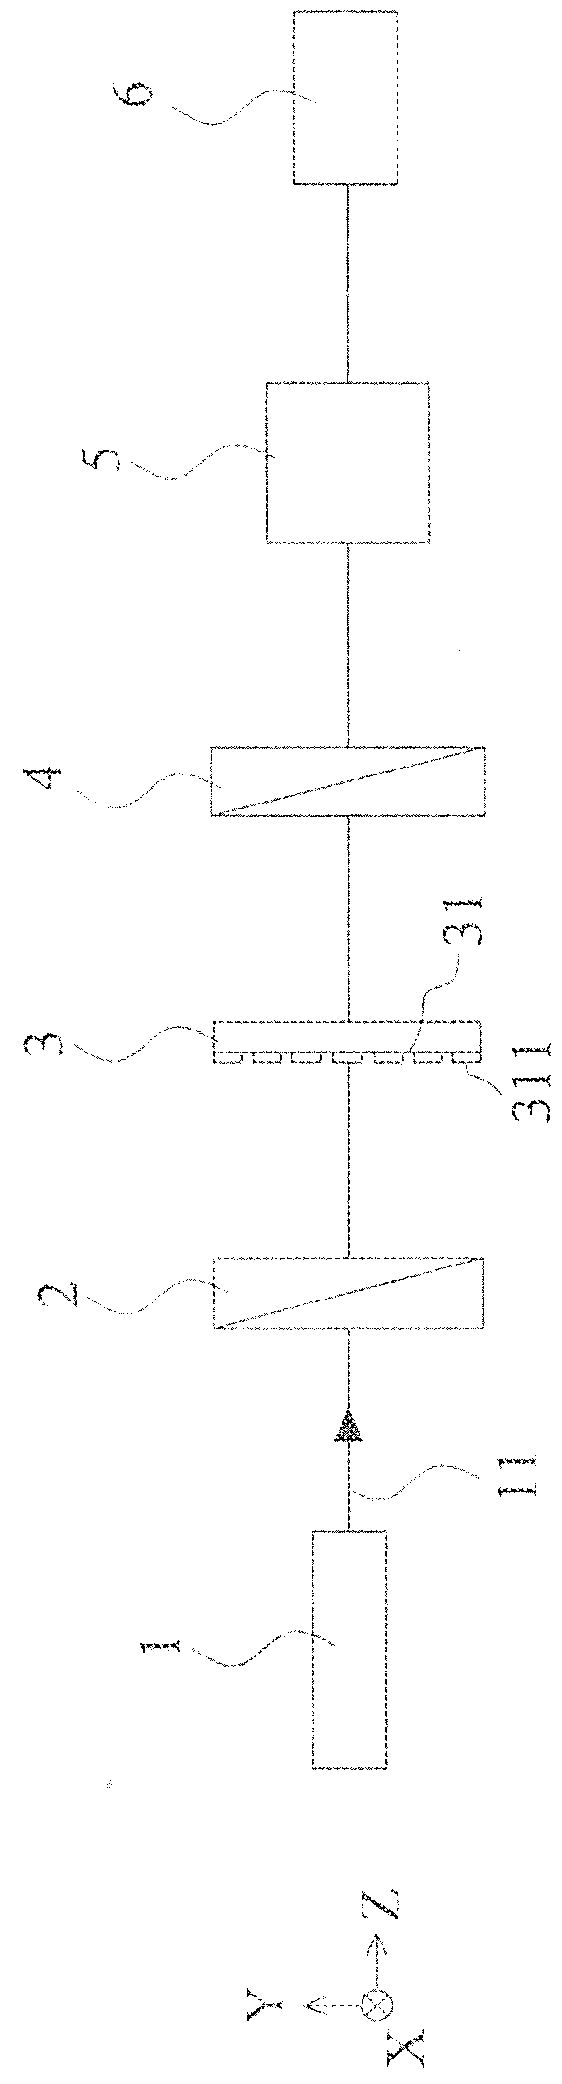 Method for localized surface plasmon resonance sensing system